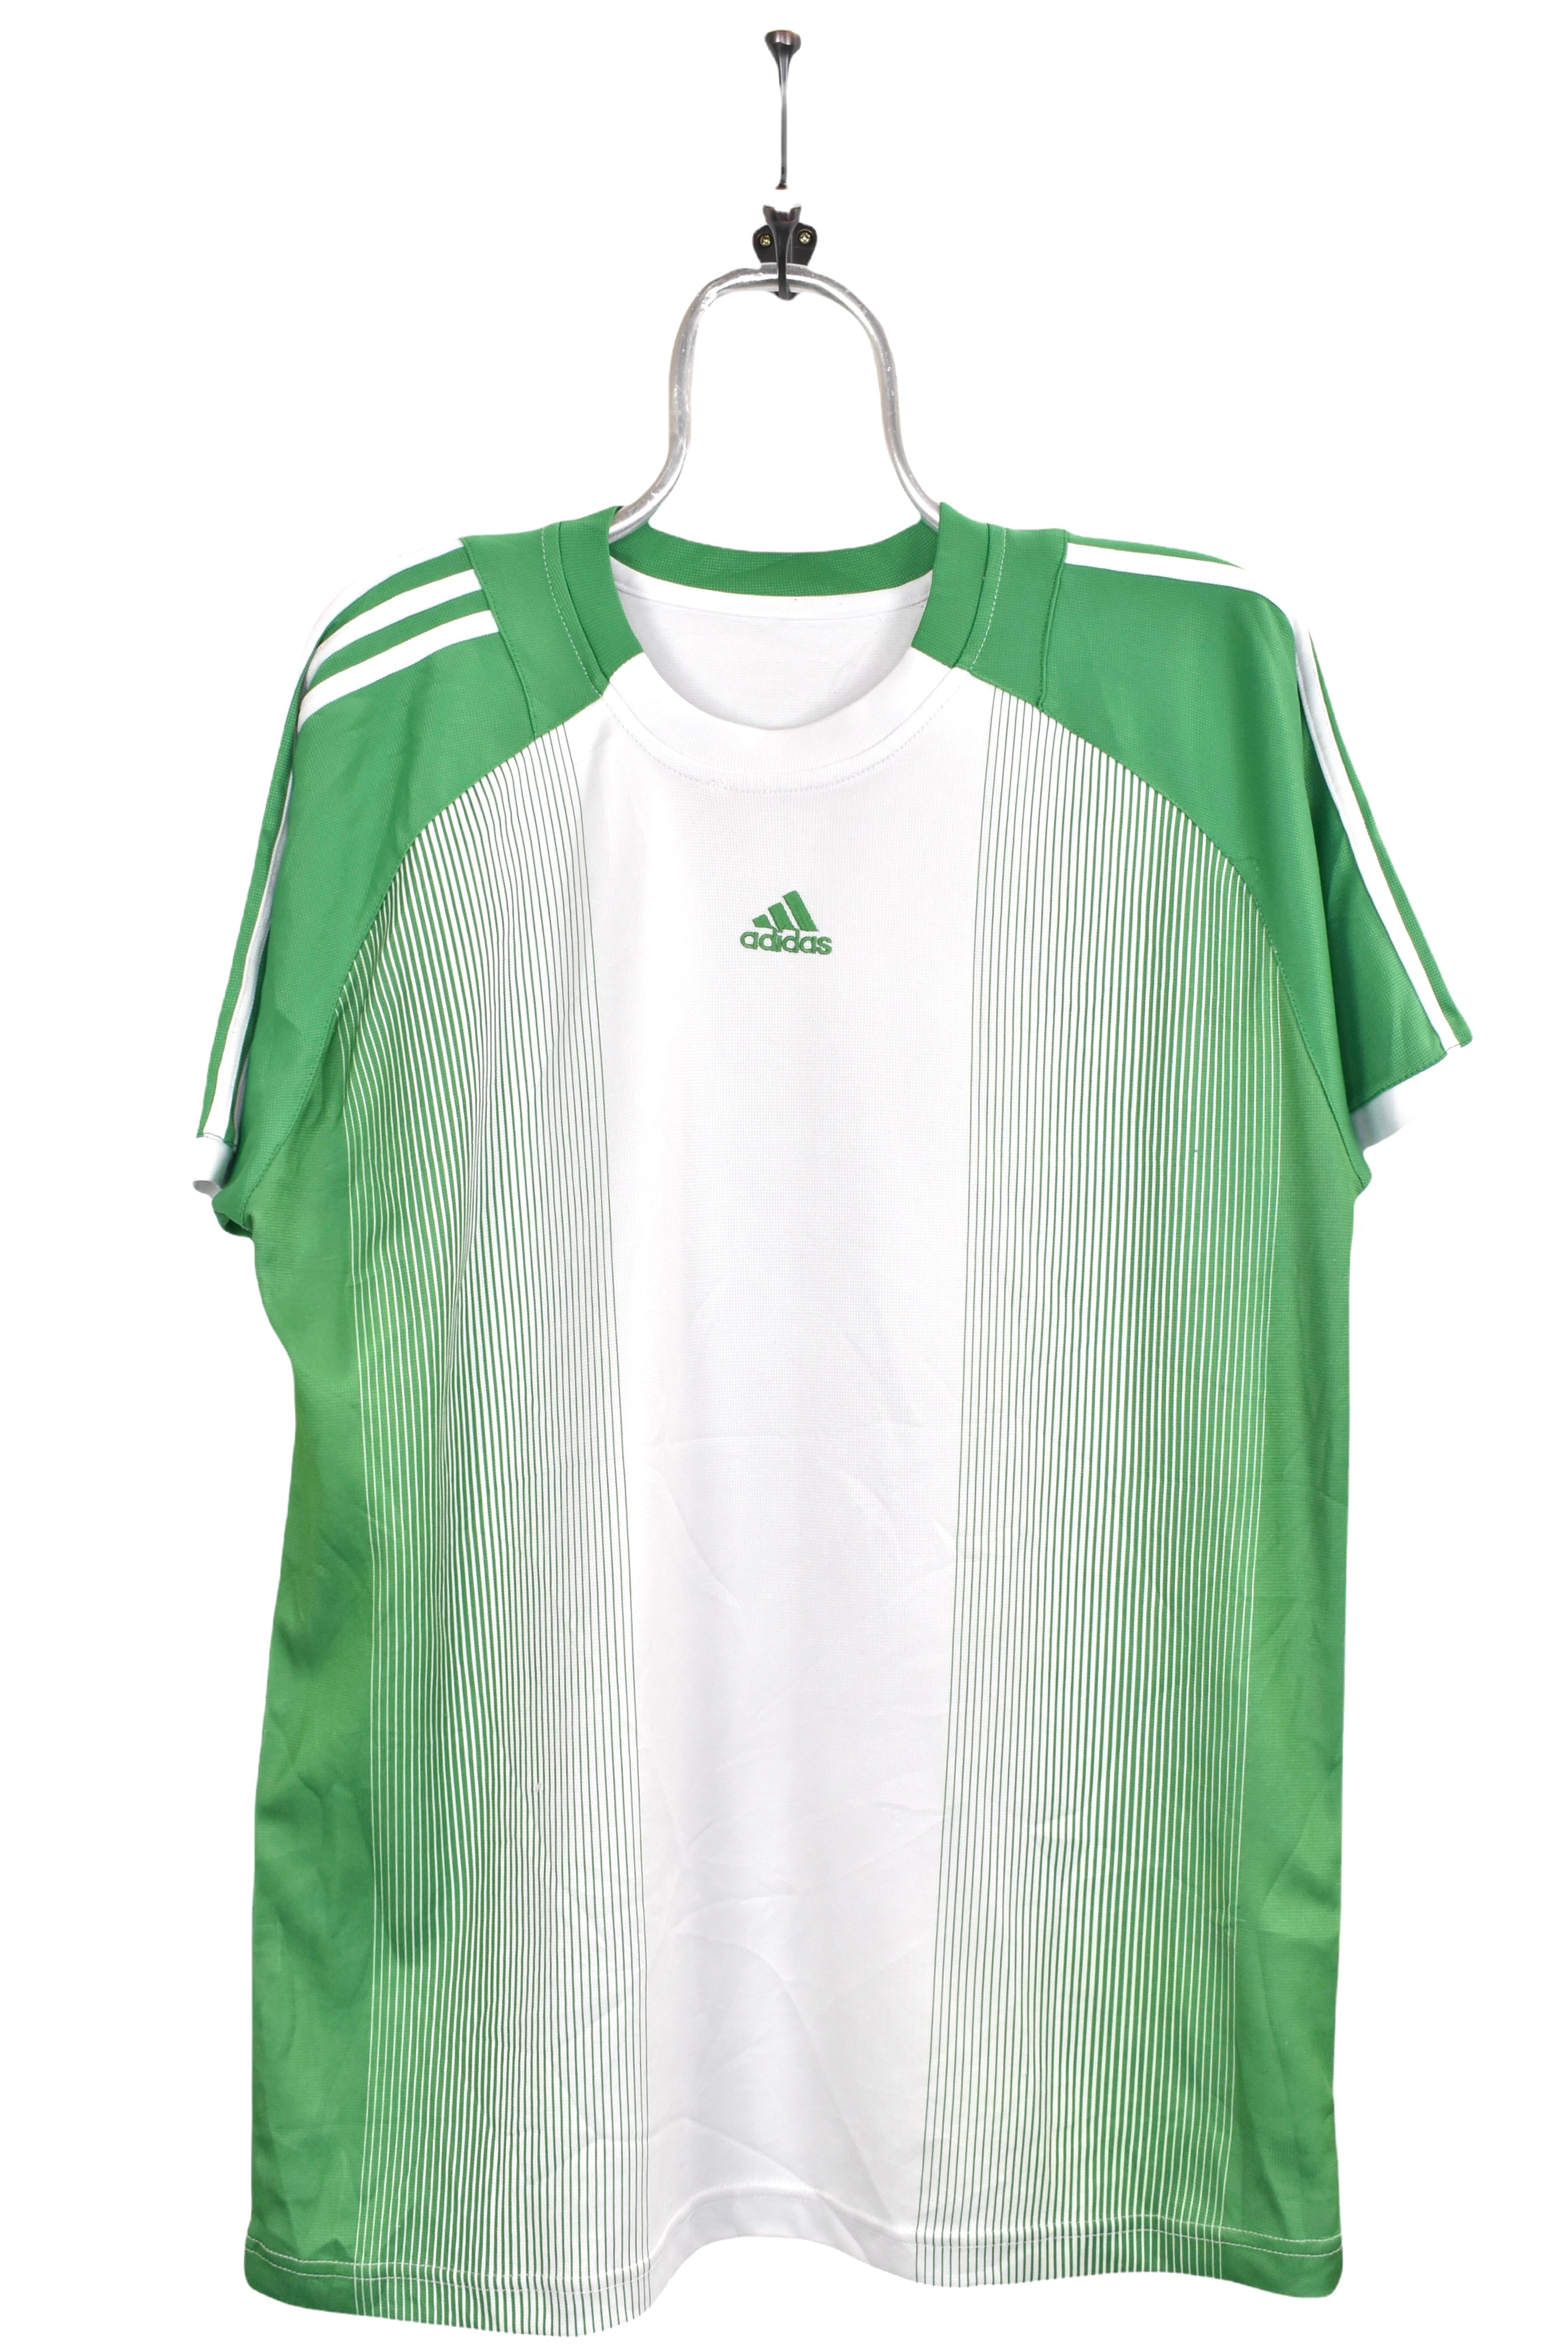 Vintage Adidas shirt, athletic soccer embroidered tee - AU L ADIDAS